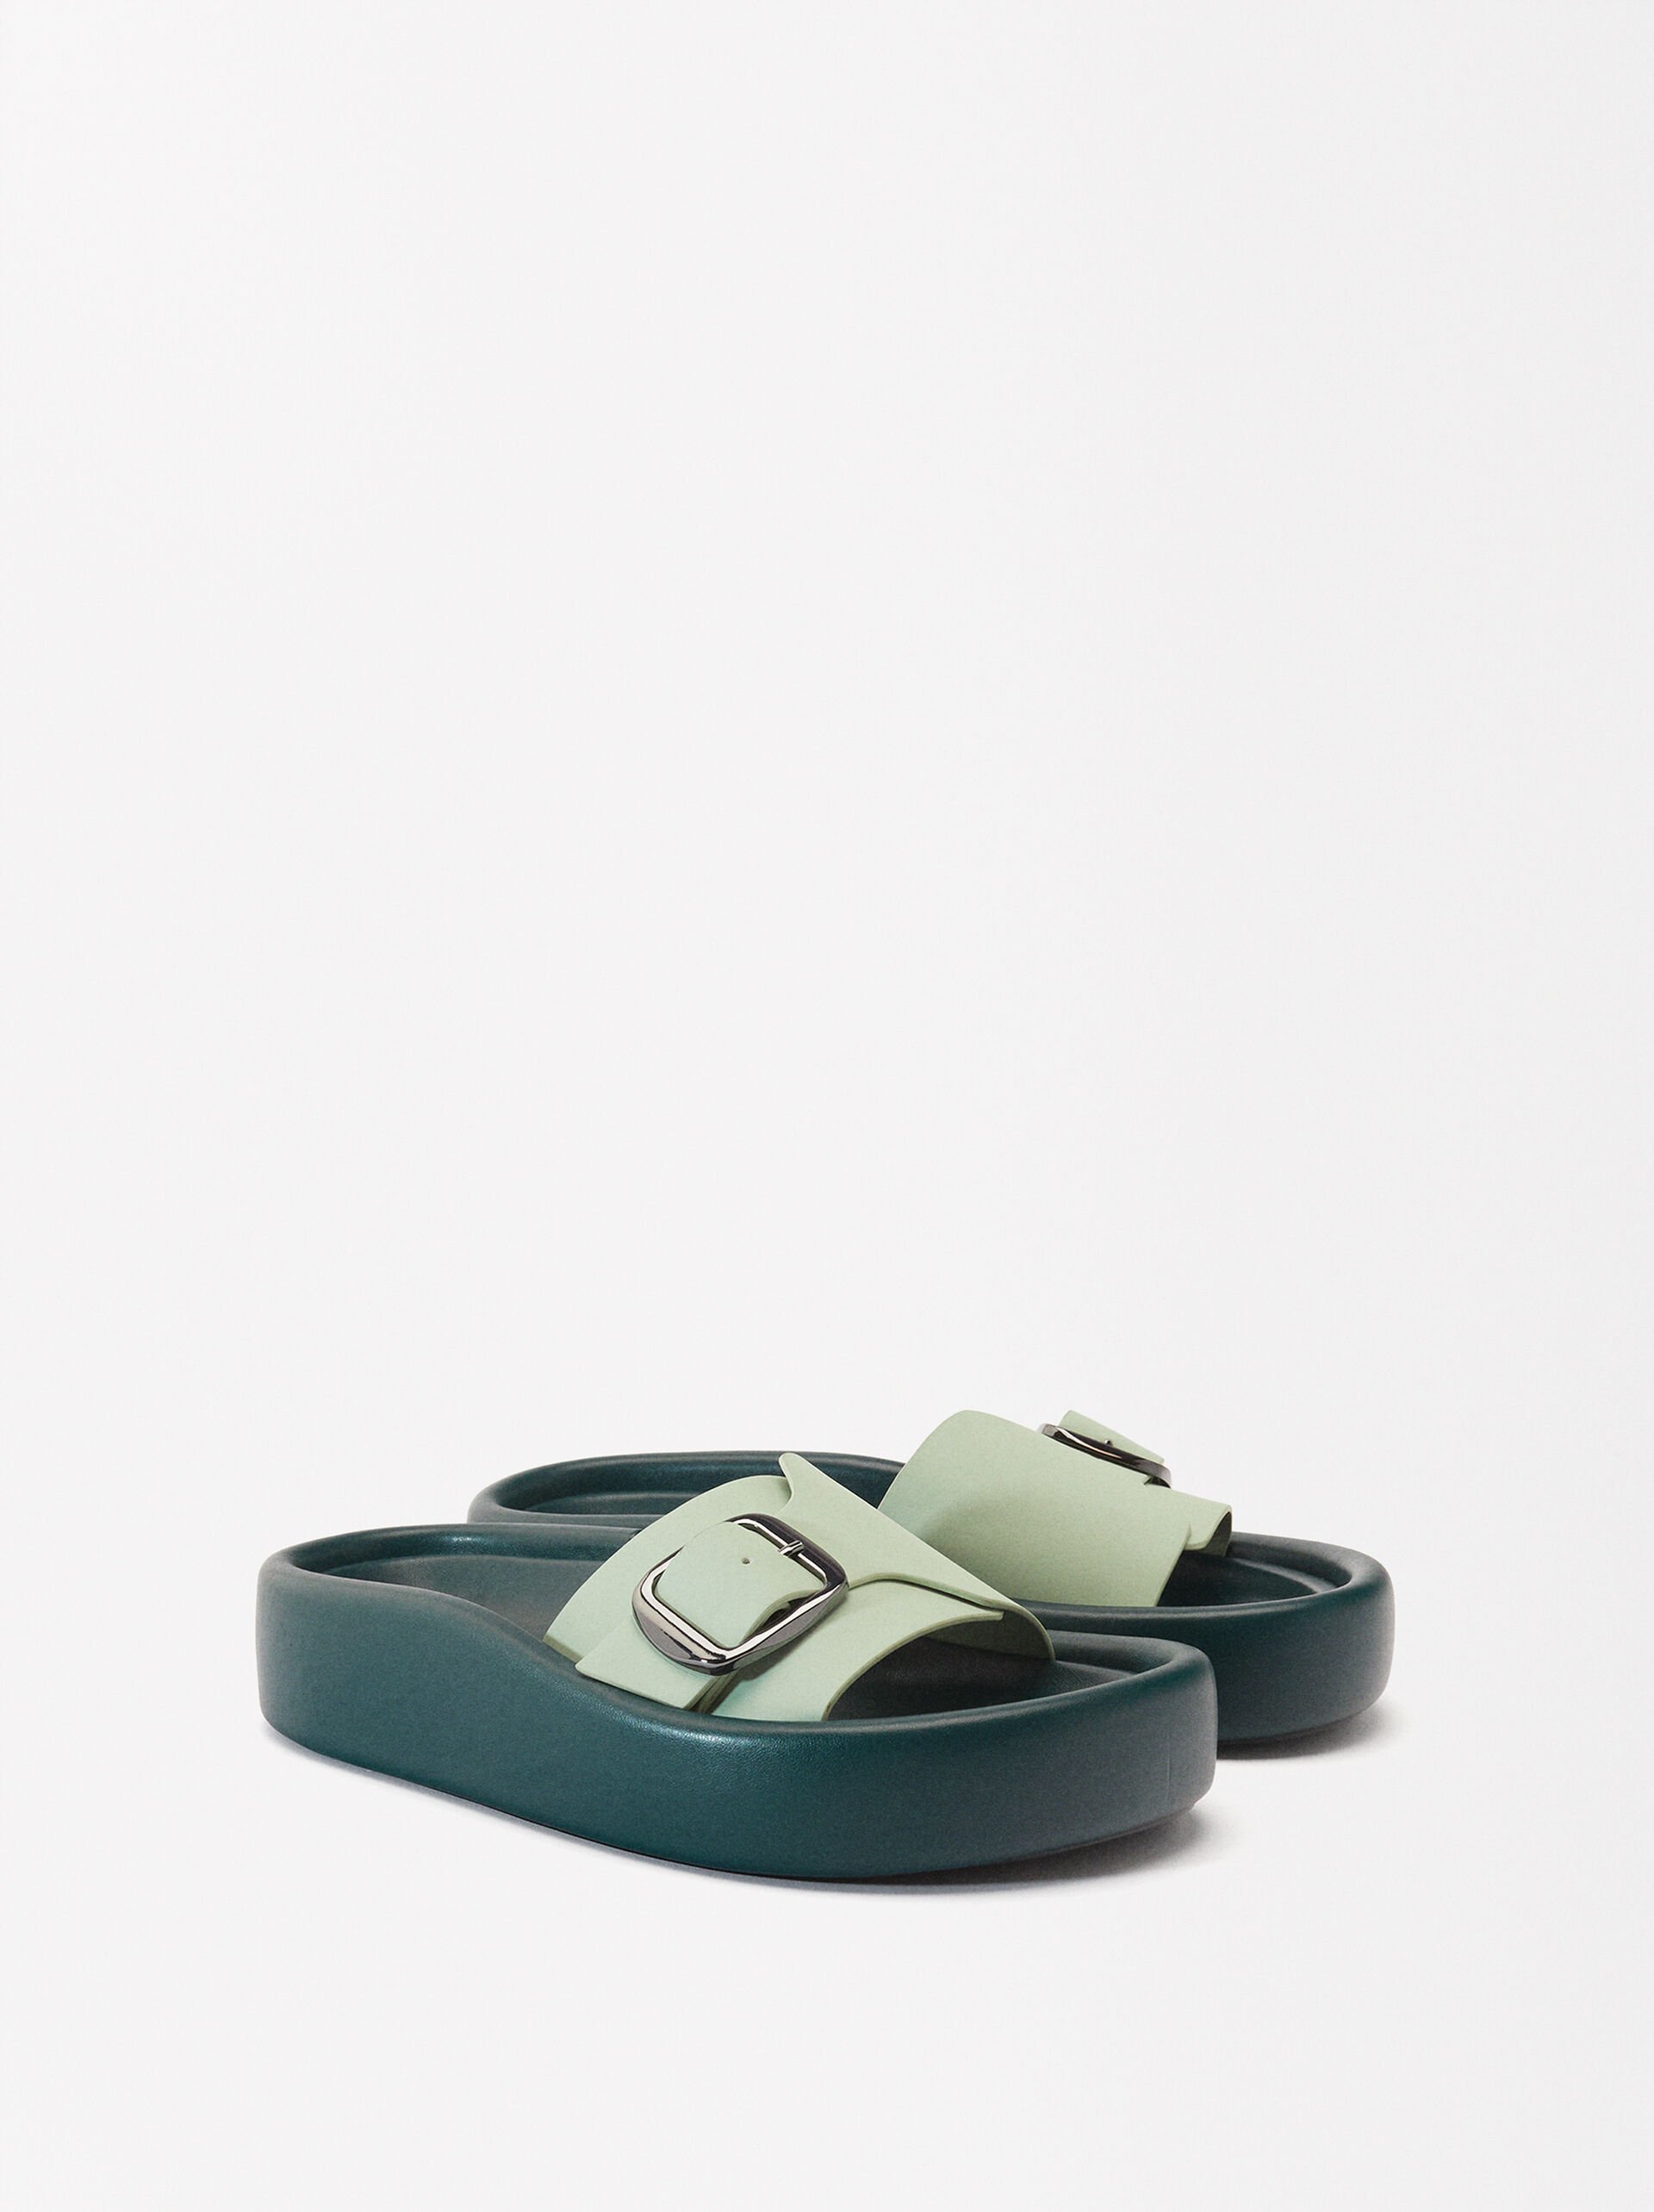 Online Exclusive - Platform Sandals image number 4.0